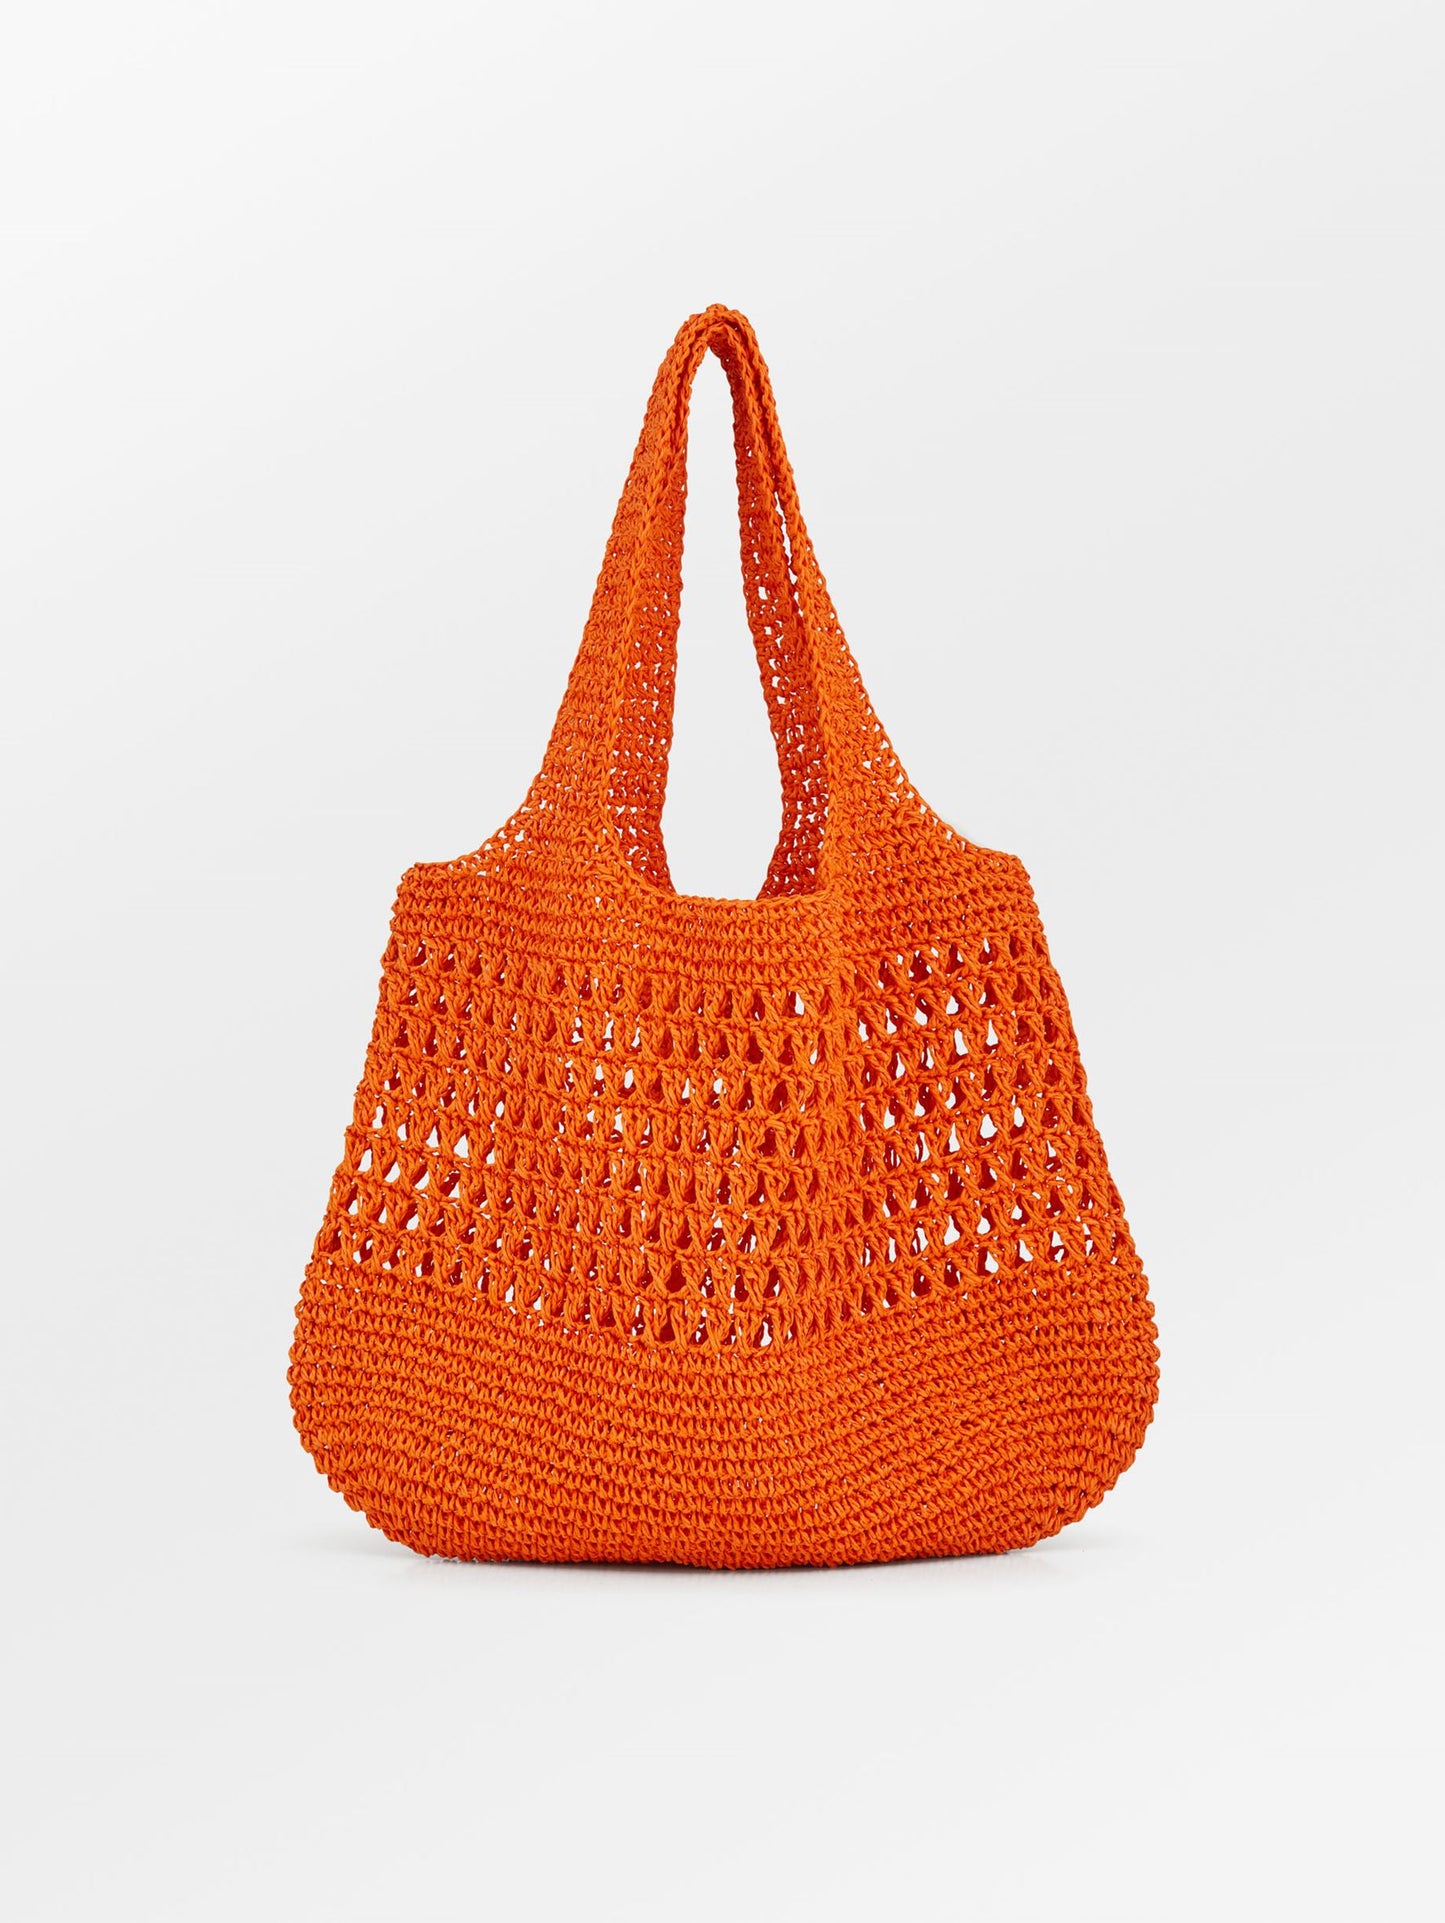 Becksöndergaard, Vanessa Riley Bag - Persimmon Orange, bags, bags